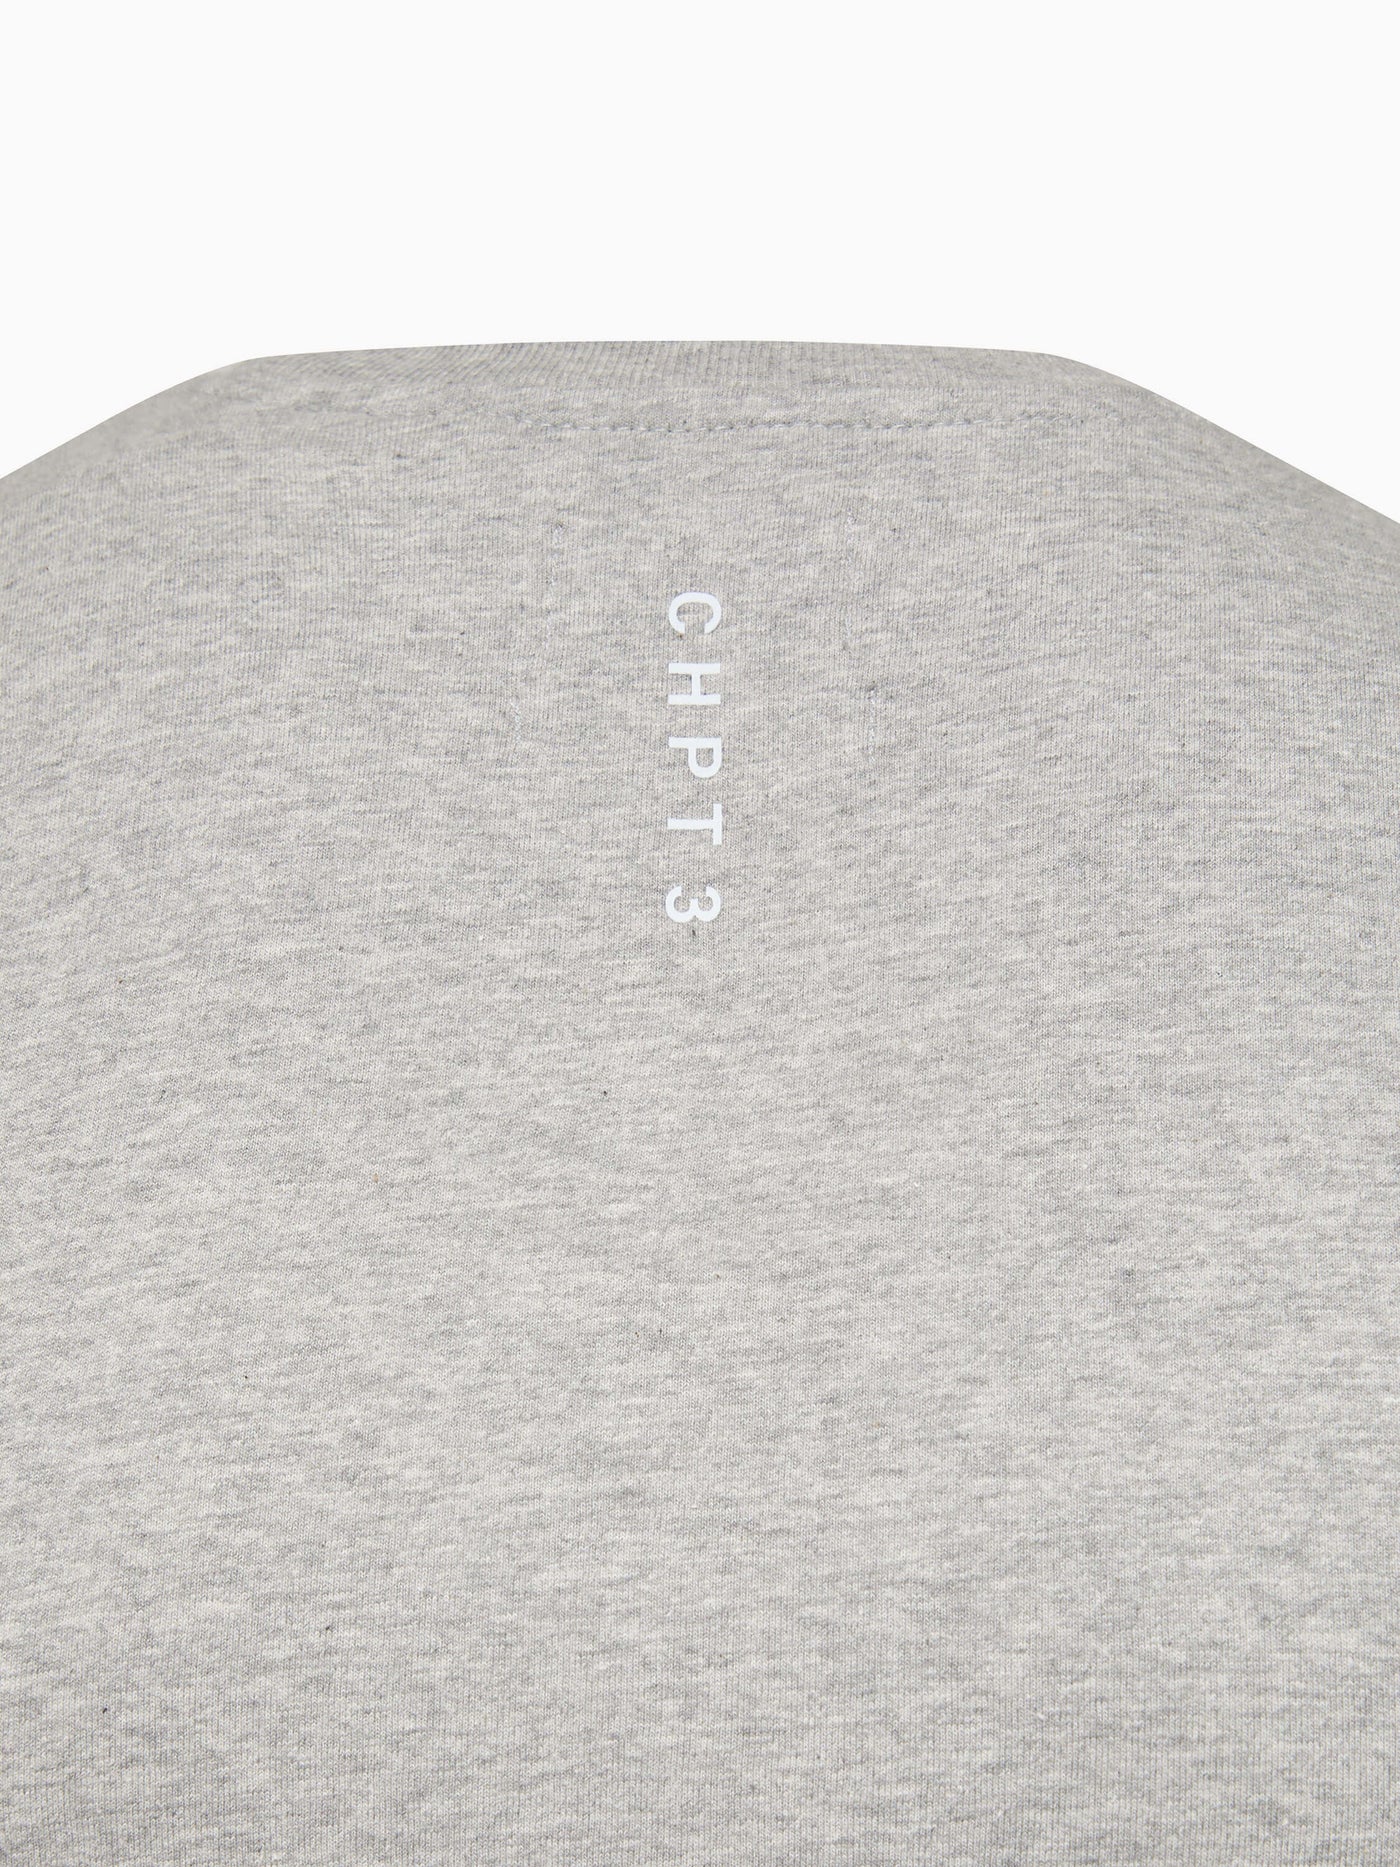 CHPT3 Elysée women's organic cotton t-shirt in colour grey marl, close up print details #color_grey-marl